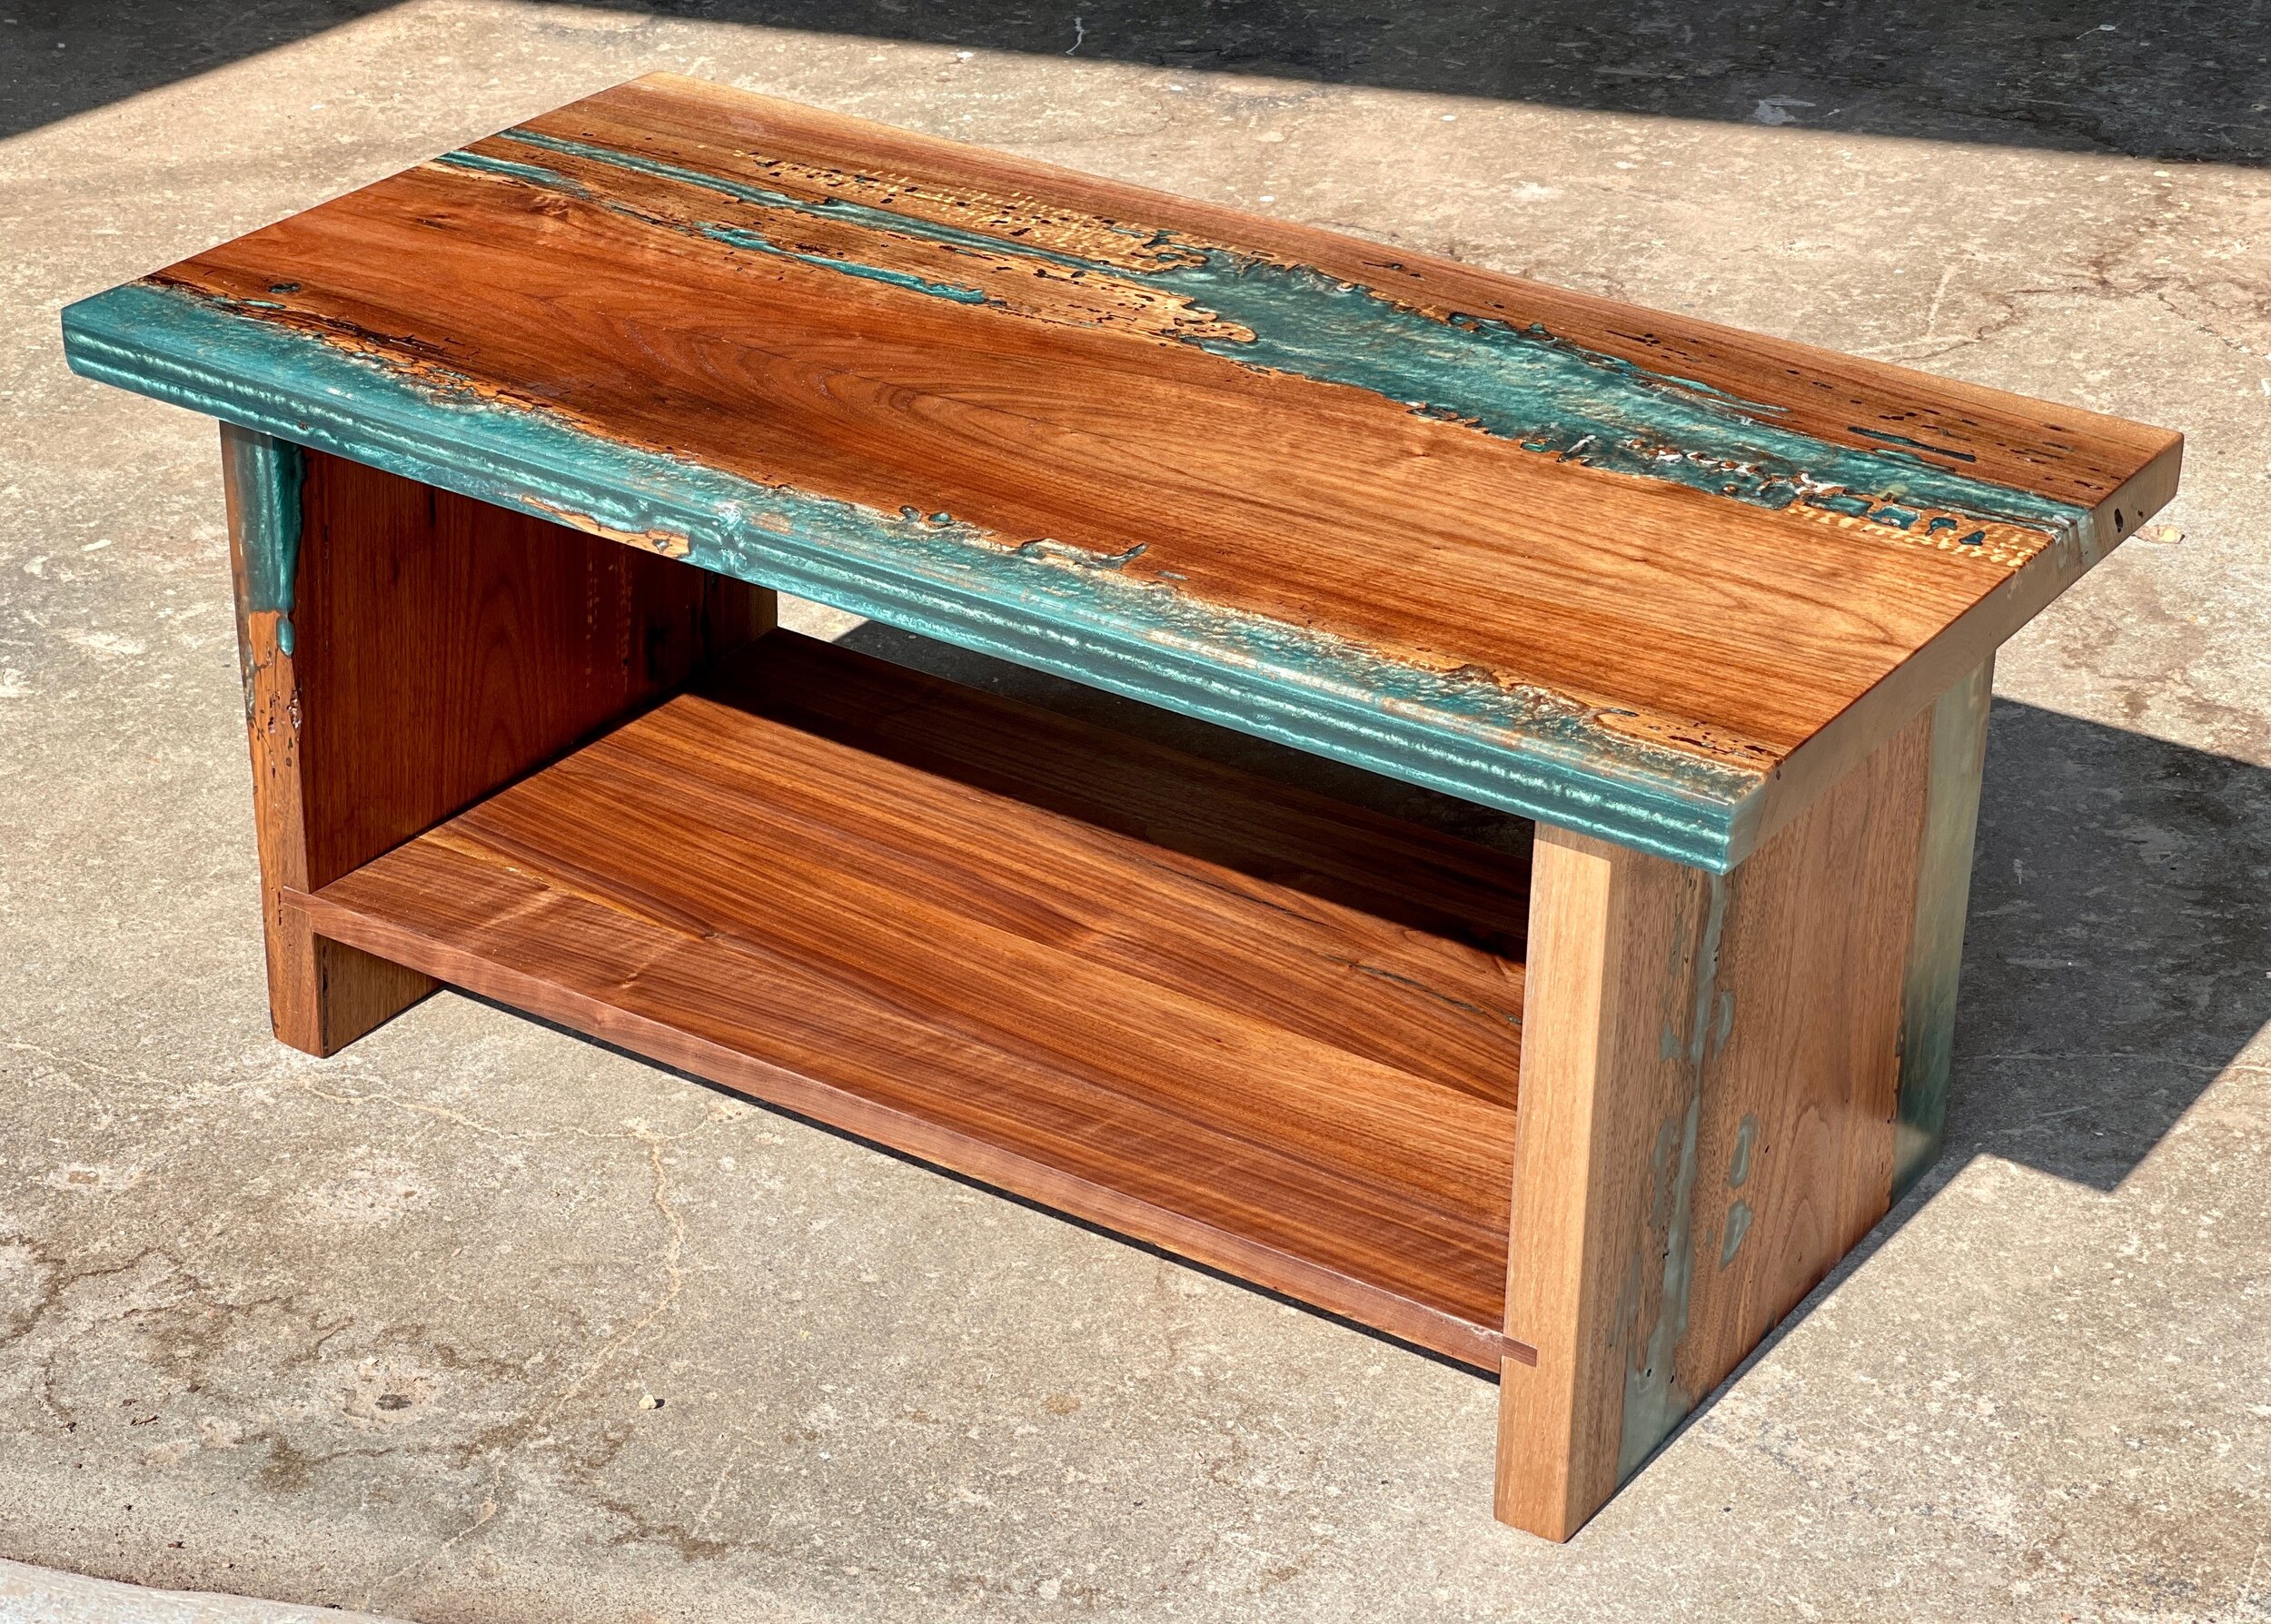 Sallie Plumley Studio, Richmond Virginia. Walnut plank coffee table with rotten epoxy details. Sally Plumlee Studio North Carolina.jpeg